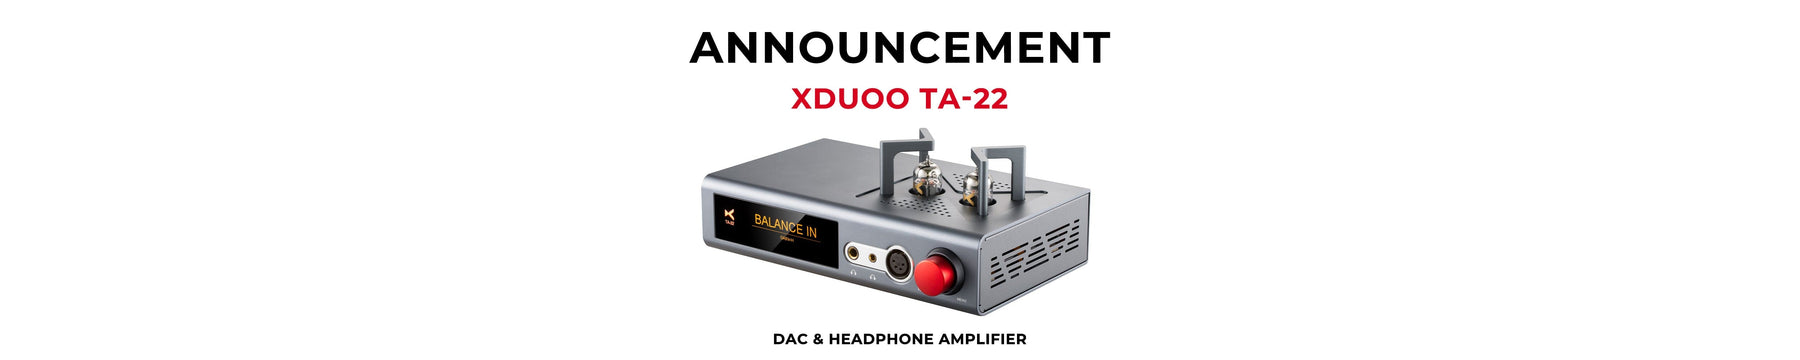 xDuoo Introduces TA-22: A High-Performance Desktop DAC + Tube Hybrid Headphone Amplifier